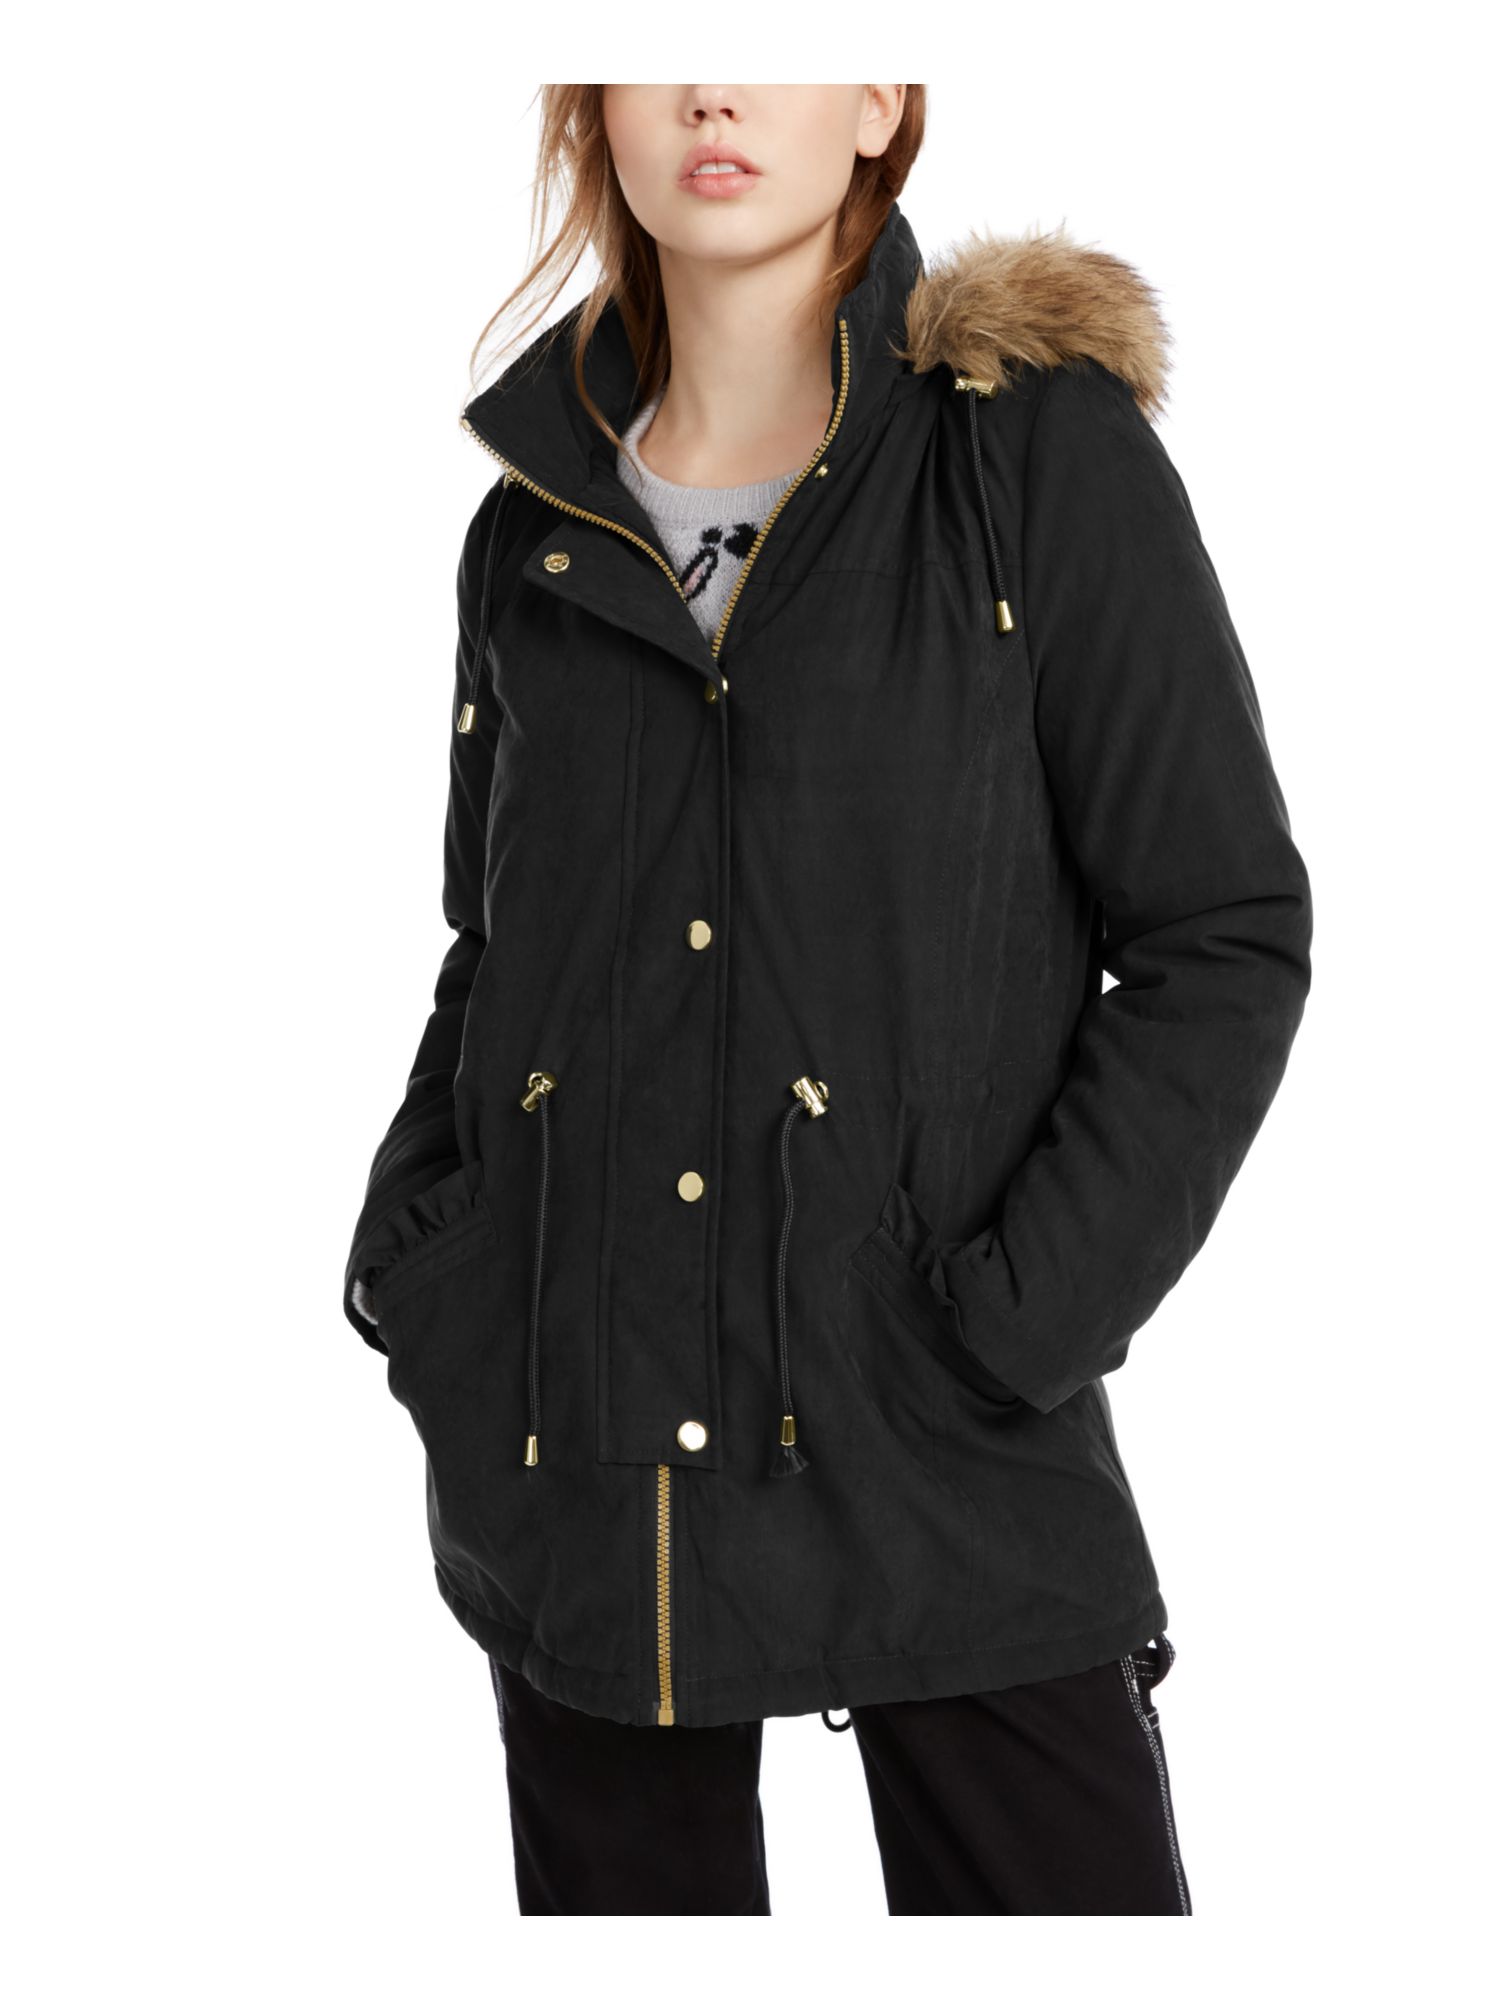 CELEBRITY PINK Womens Black Parka Winter Jacket Coat Juniors S - image 1 of 4